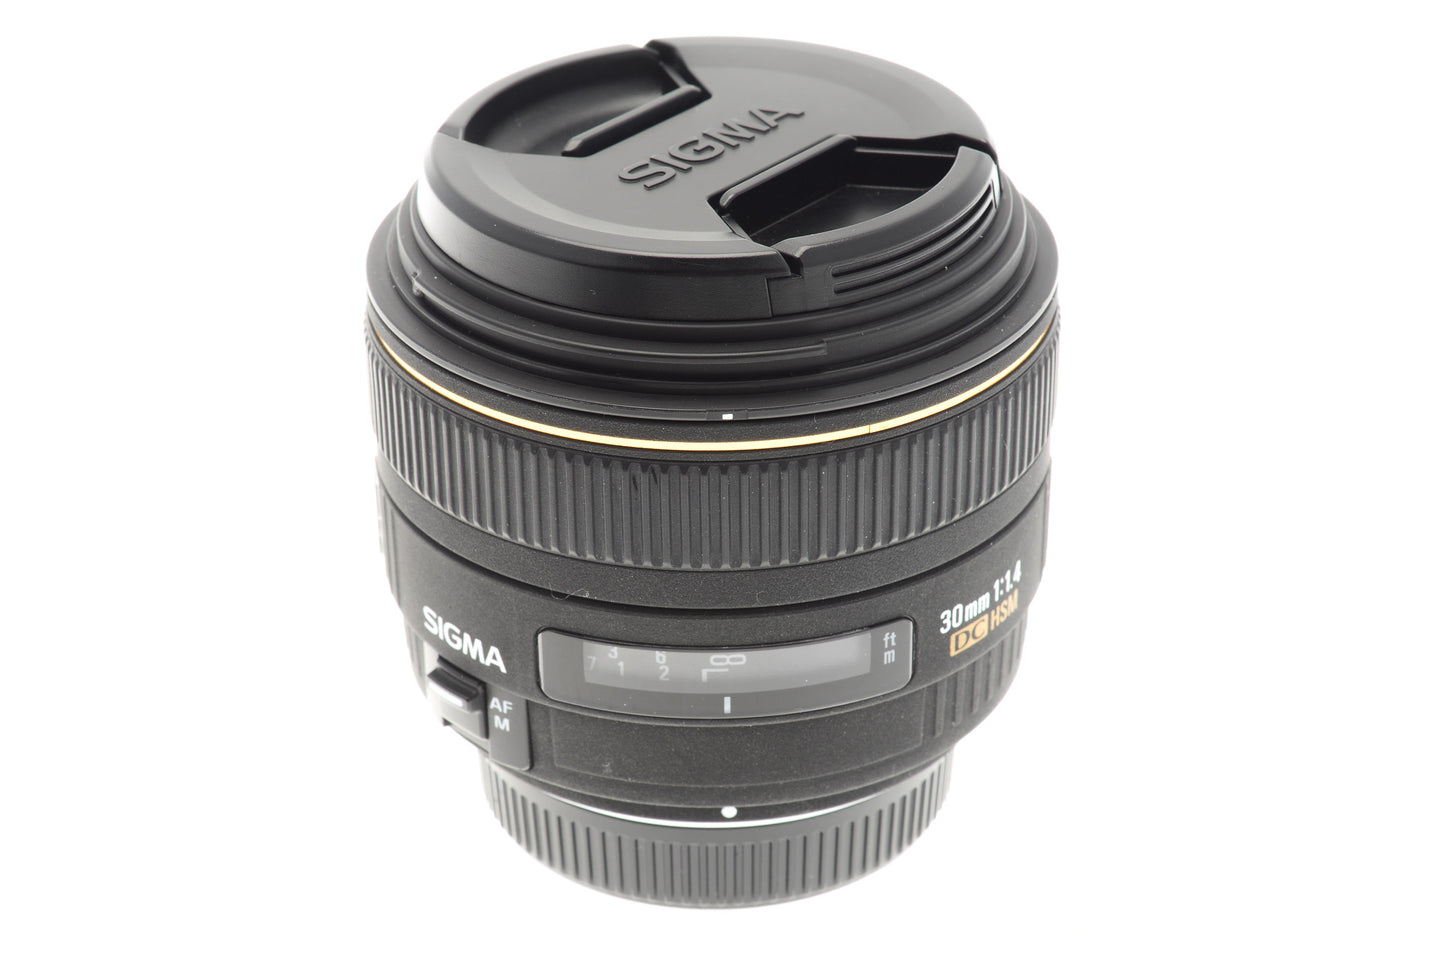 Sigma 30mm f1.4 EX DC HSM - Lens